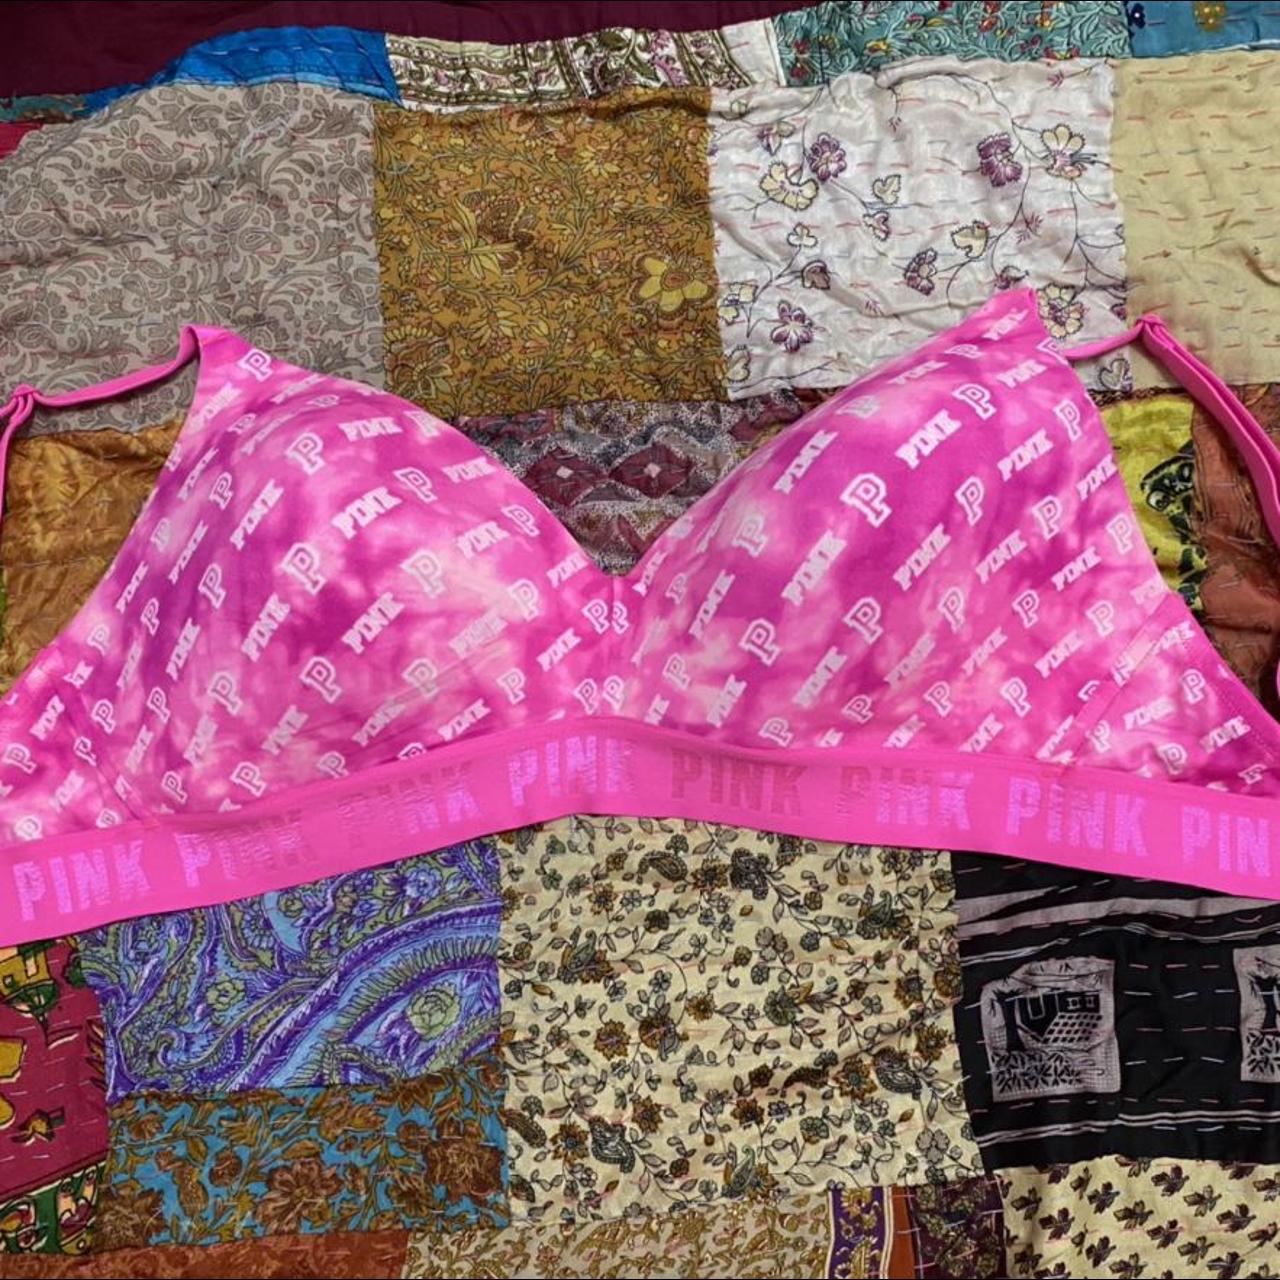 Victorias Secret 34DDD bra. This is a hot pink color - Depop